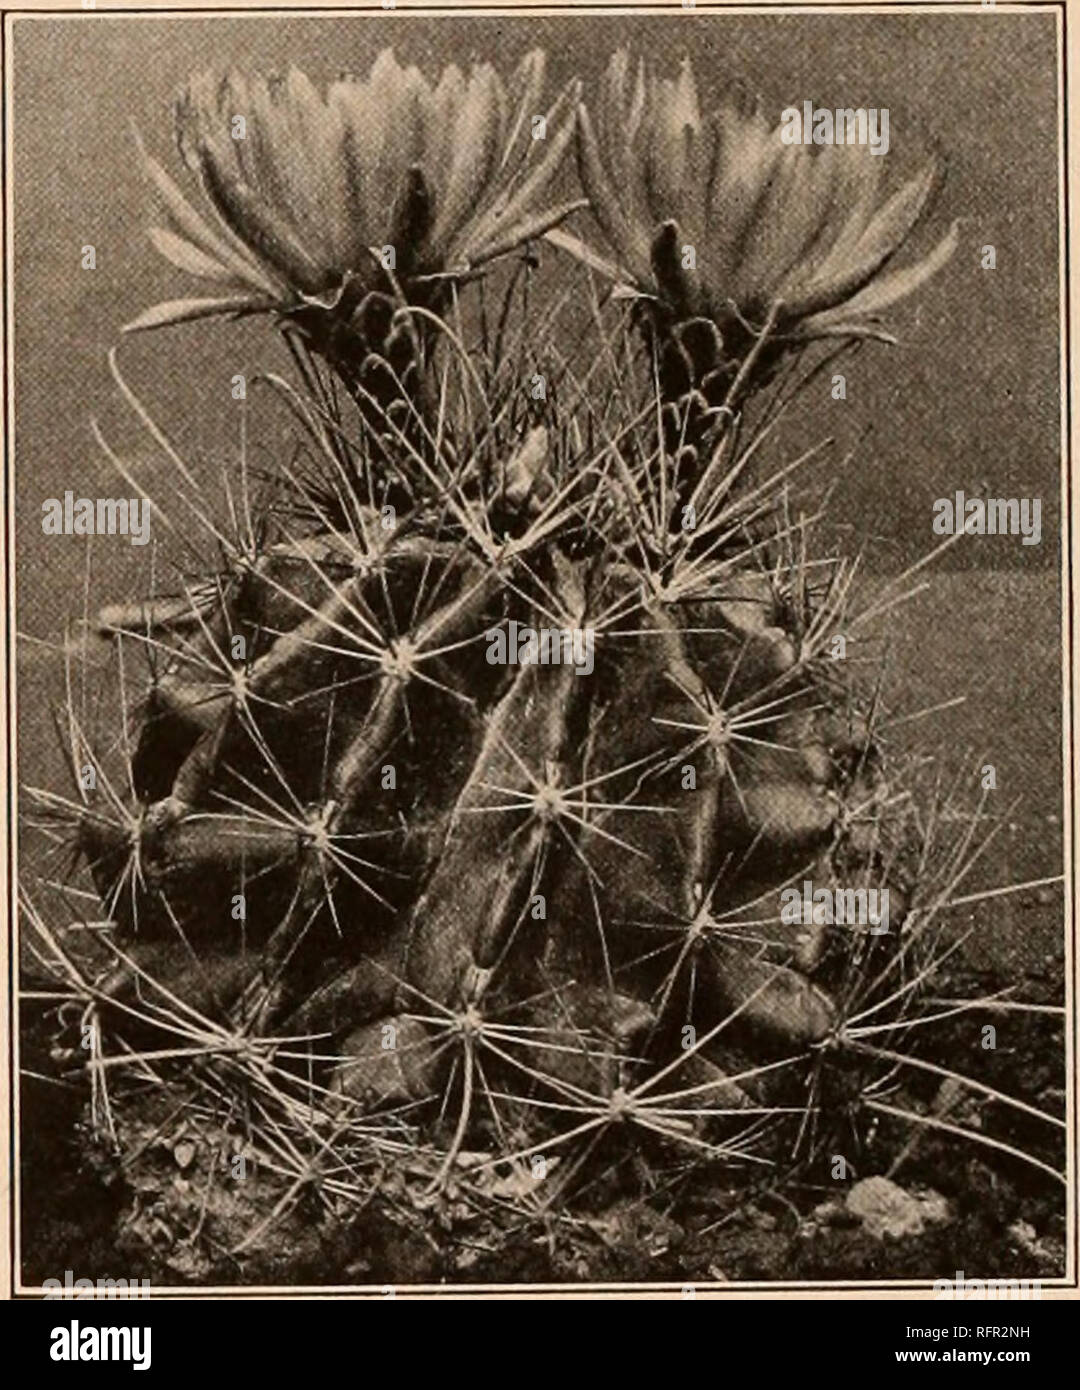 . Carnegie Institution of Washington publication. . Figs. 110 and 111.—Fruit and flower of Hamatocactus setispinus. X0.8. Fig. -Hamatocactus setispinus. 1. Hamatocactus setispinus (Engelmann). Echinocactus setispinus Engelmann, Bost. Journ. Nat. Hist. 5: 246. 1845. Echinocactus muehlenpfordlii Fennel, Allg. Gartenz. 15: 65. 1847. Echinocactus hamatus Muhlenpfordt, Allg. Gartenz. 16: 18. 1848. Not Forbes, 1837. Echinocactns setispinus hamatus Engelmann, Bost. Journ. Nat. Hist. 6: 201. 1850. Echinocactus setispinus setaceus Engelmann, Bost. Journ. Nat. Hist. 6: 201. 1850. Echinocactus setispinus Stock Photo